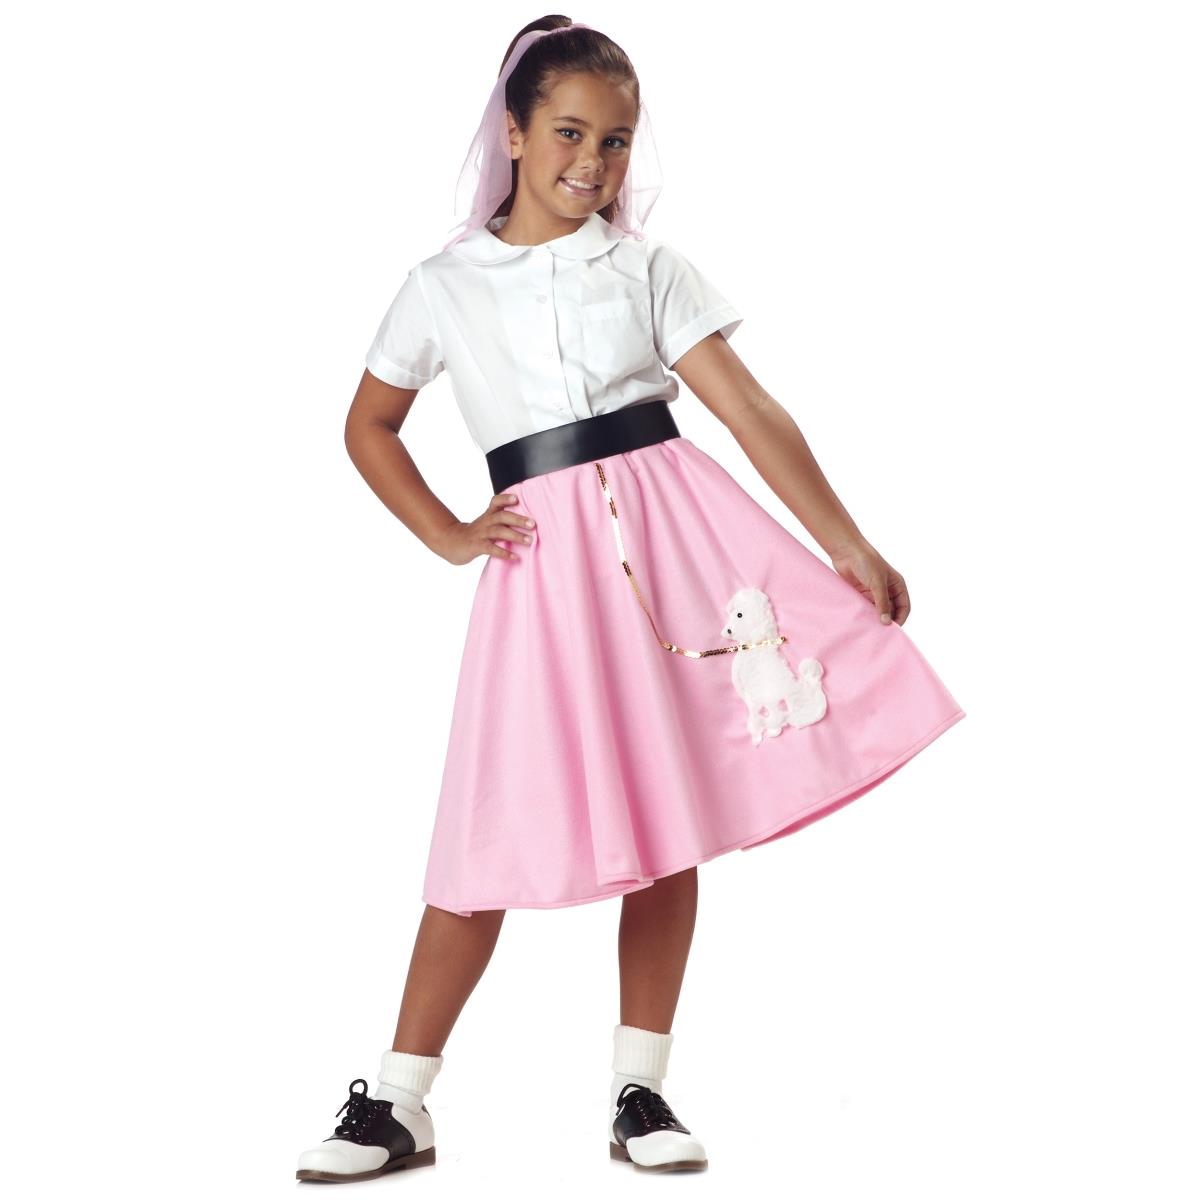 279393 Girls Poodle Skirt Costume - Medium